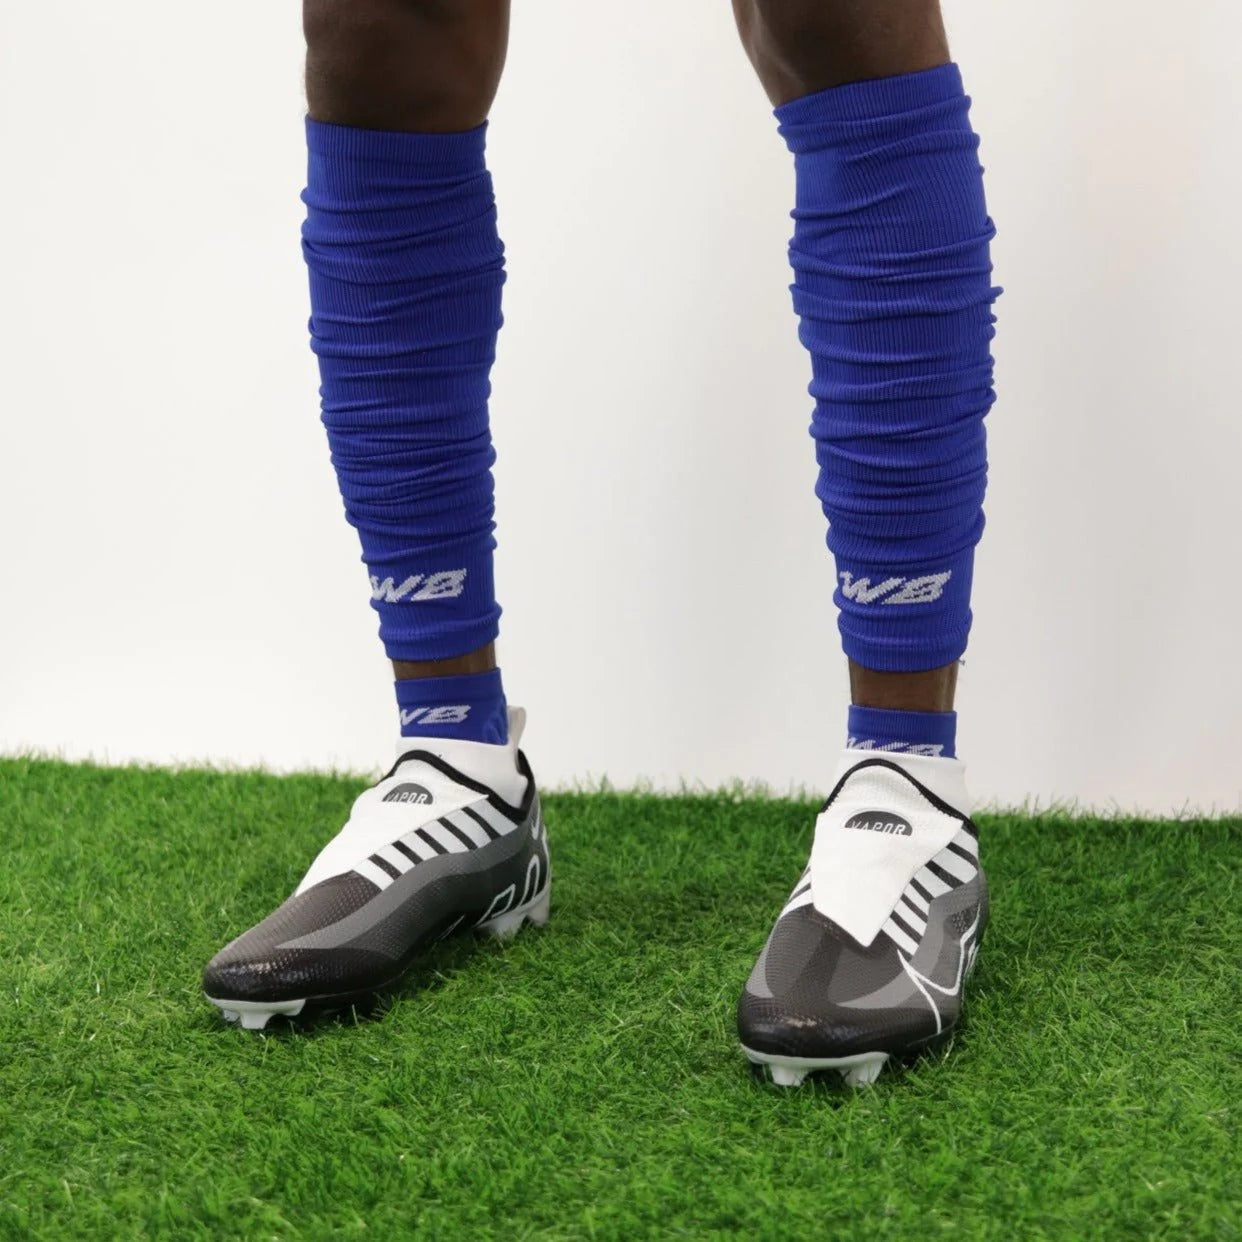 WeBall Football Leg Sleeves 2.0